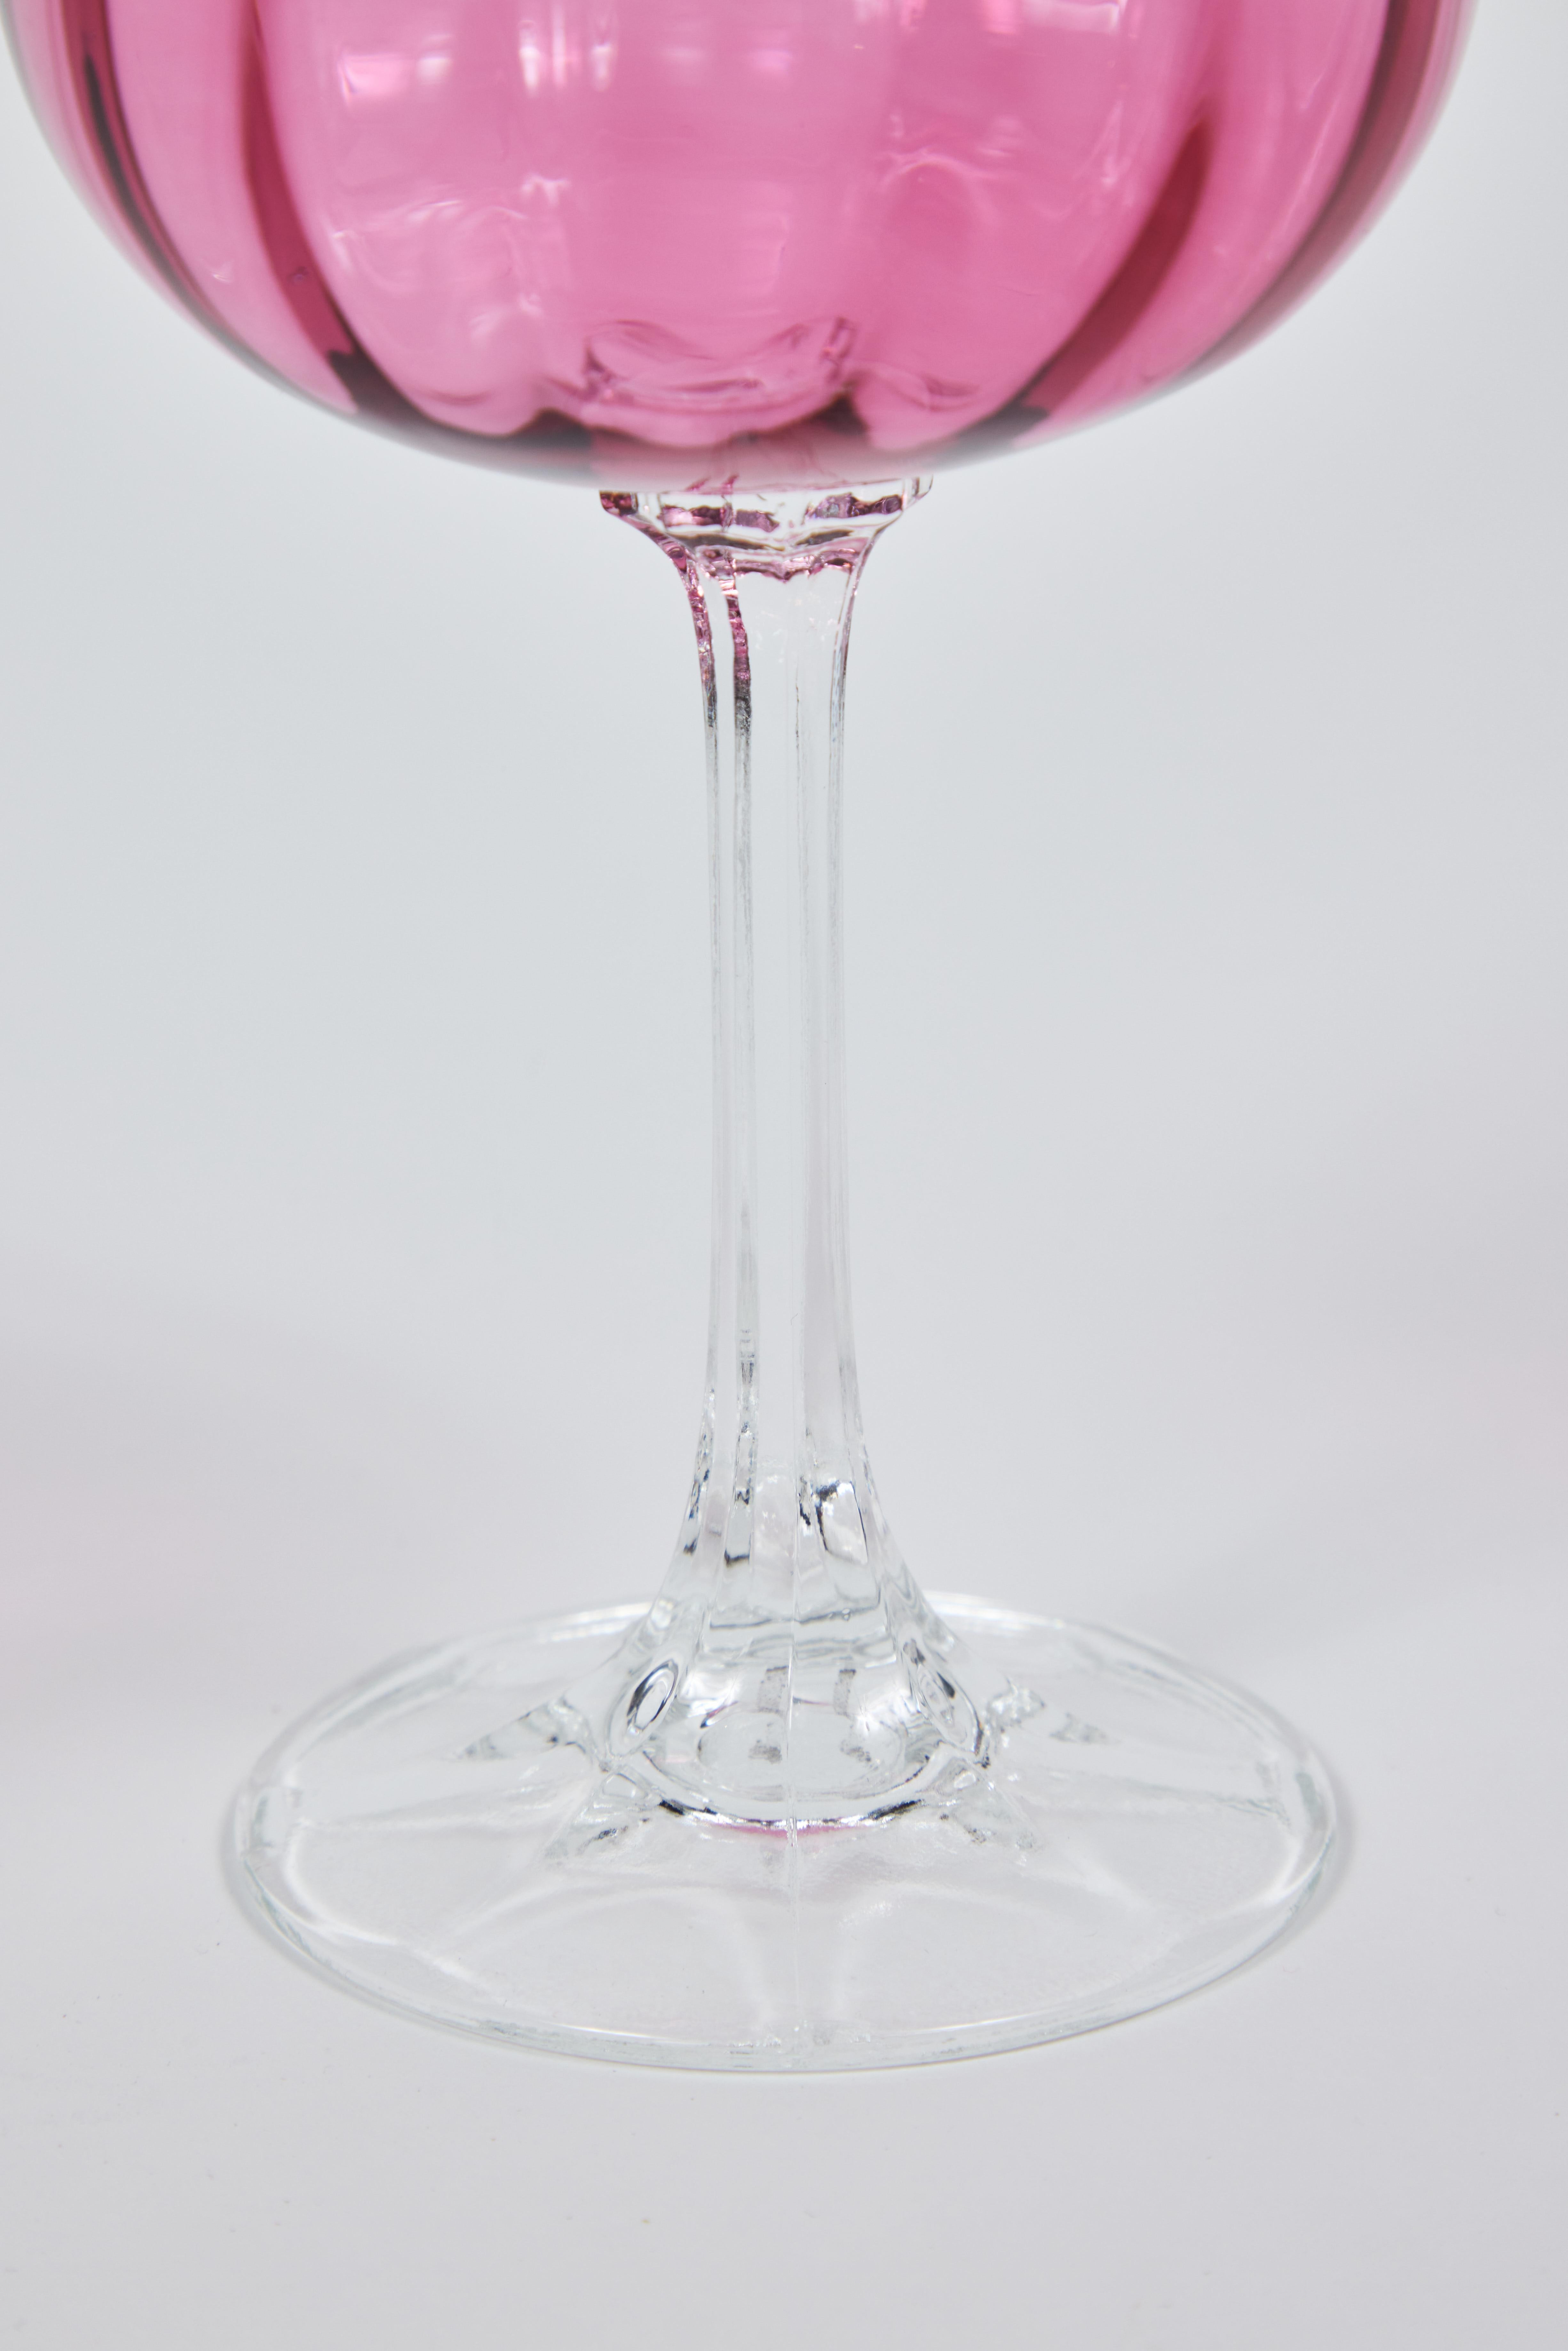 cranberry wine glasses